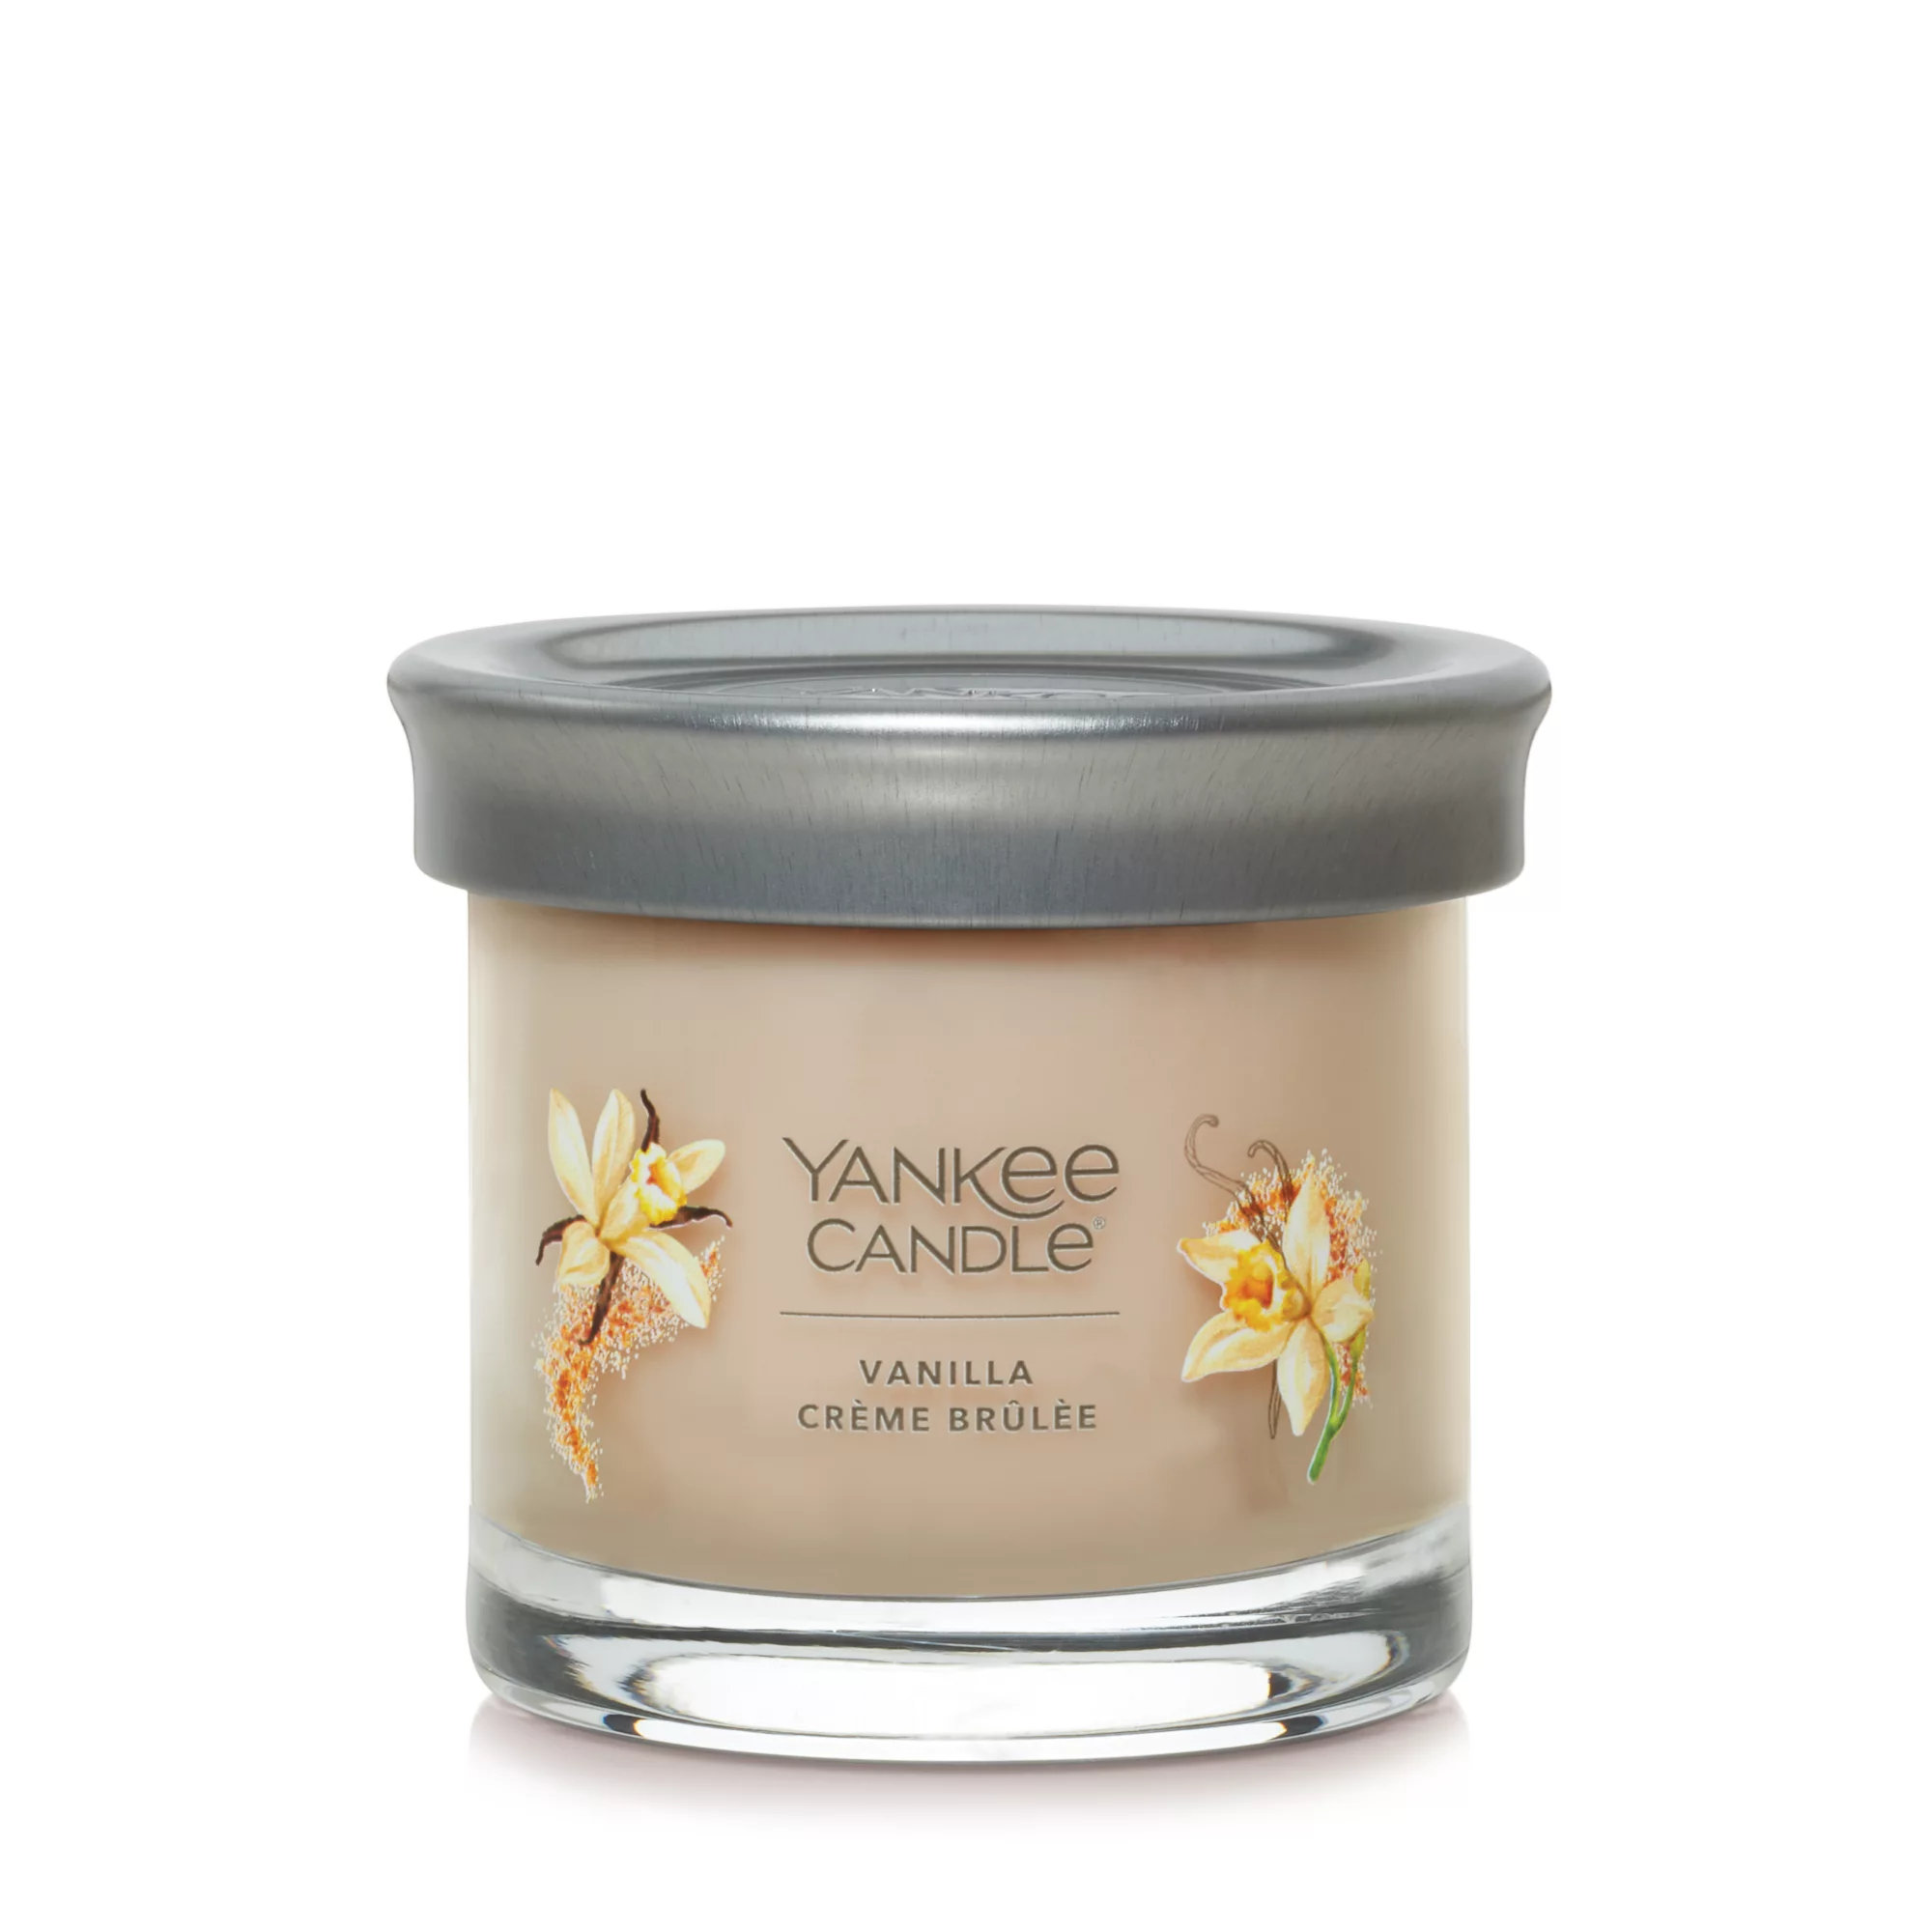 Yankee Candle Vanilla Crème Brûlée Signature Small Tumbler Candle & Reviews